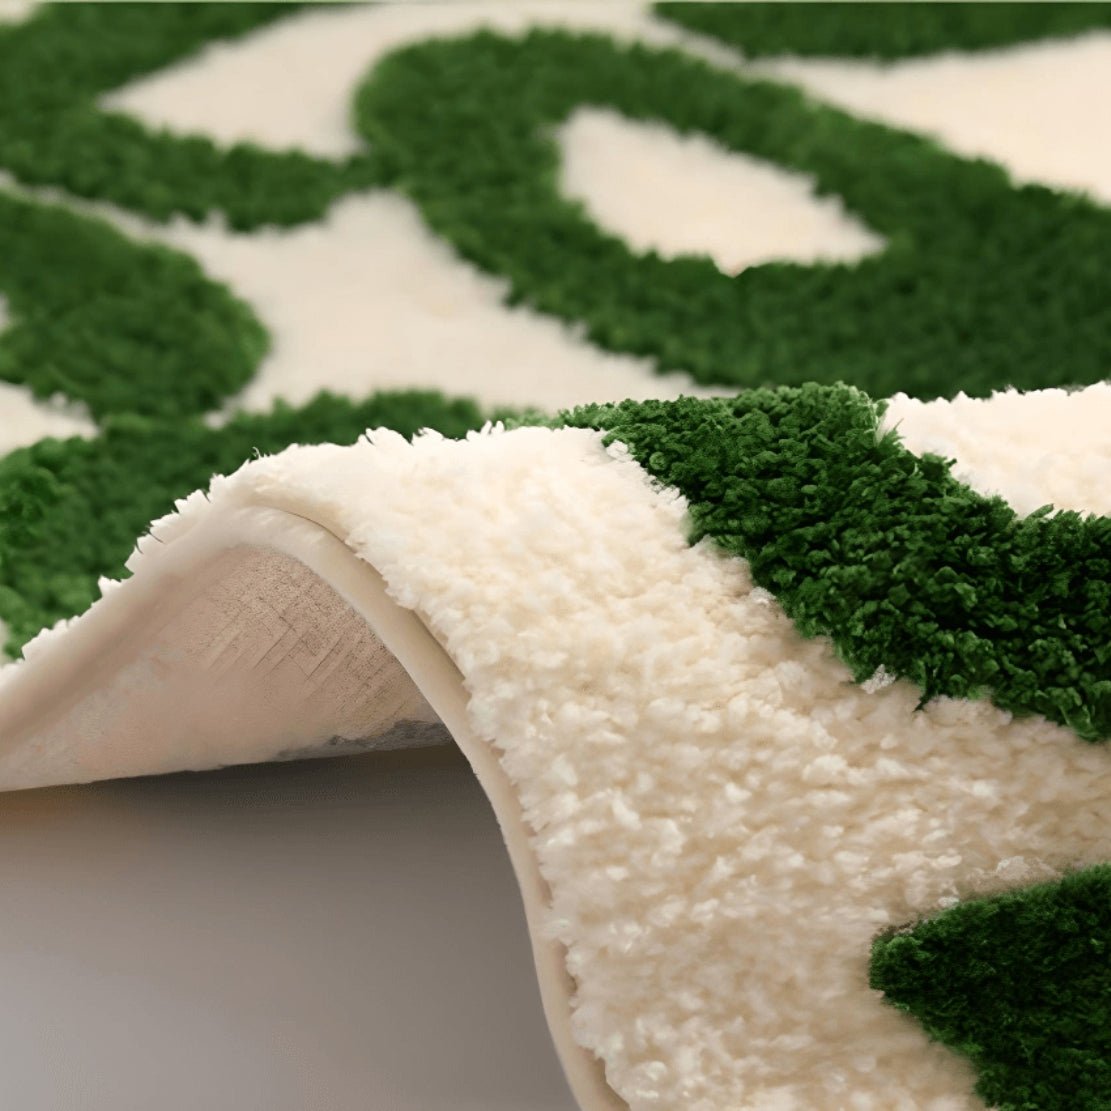 Green & white textile closeup image rug